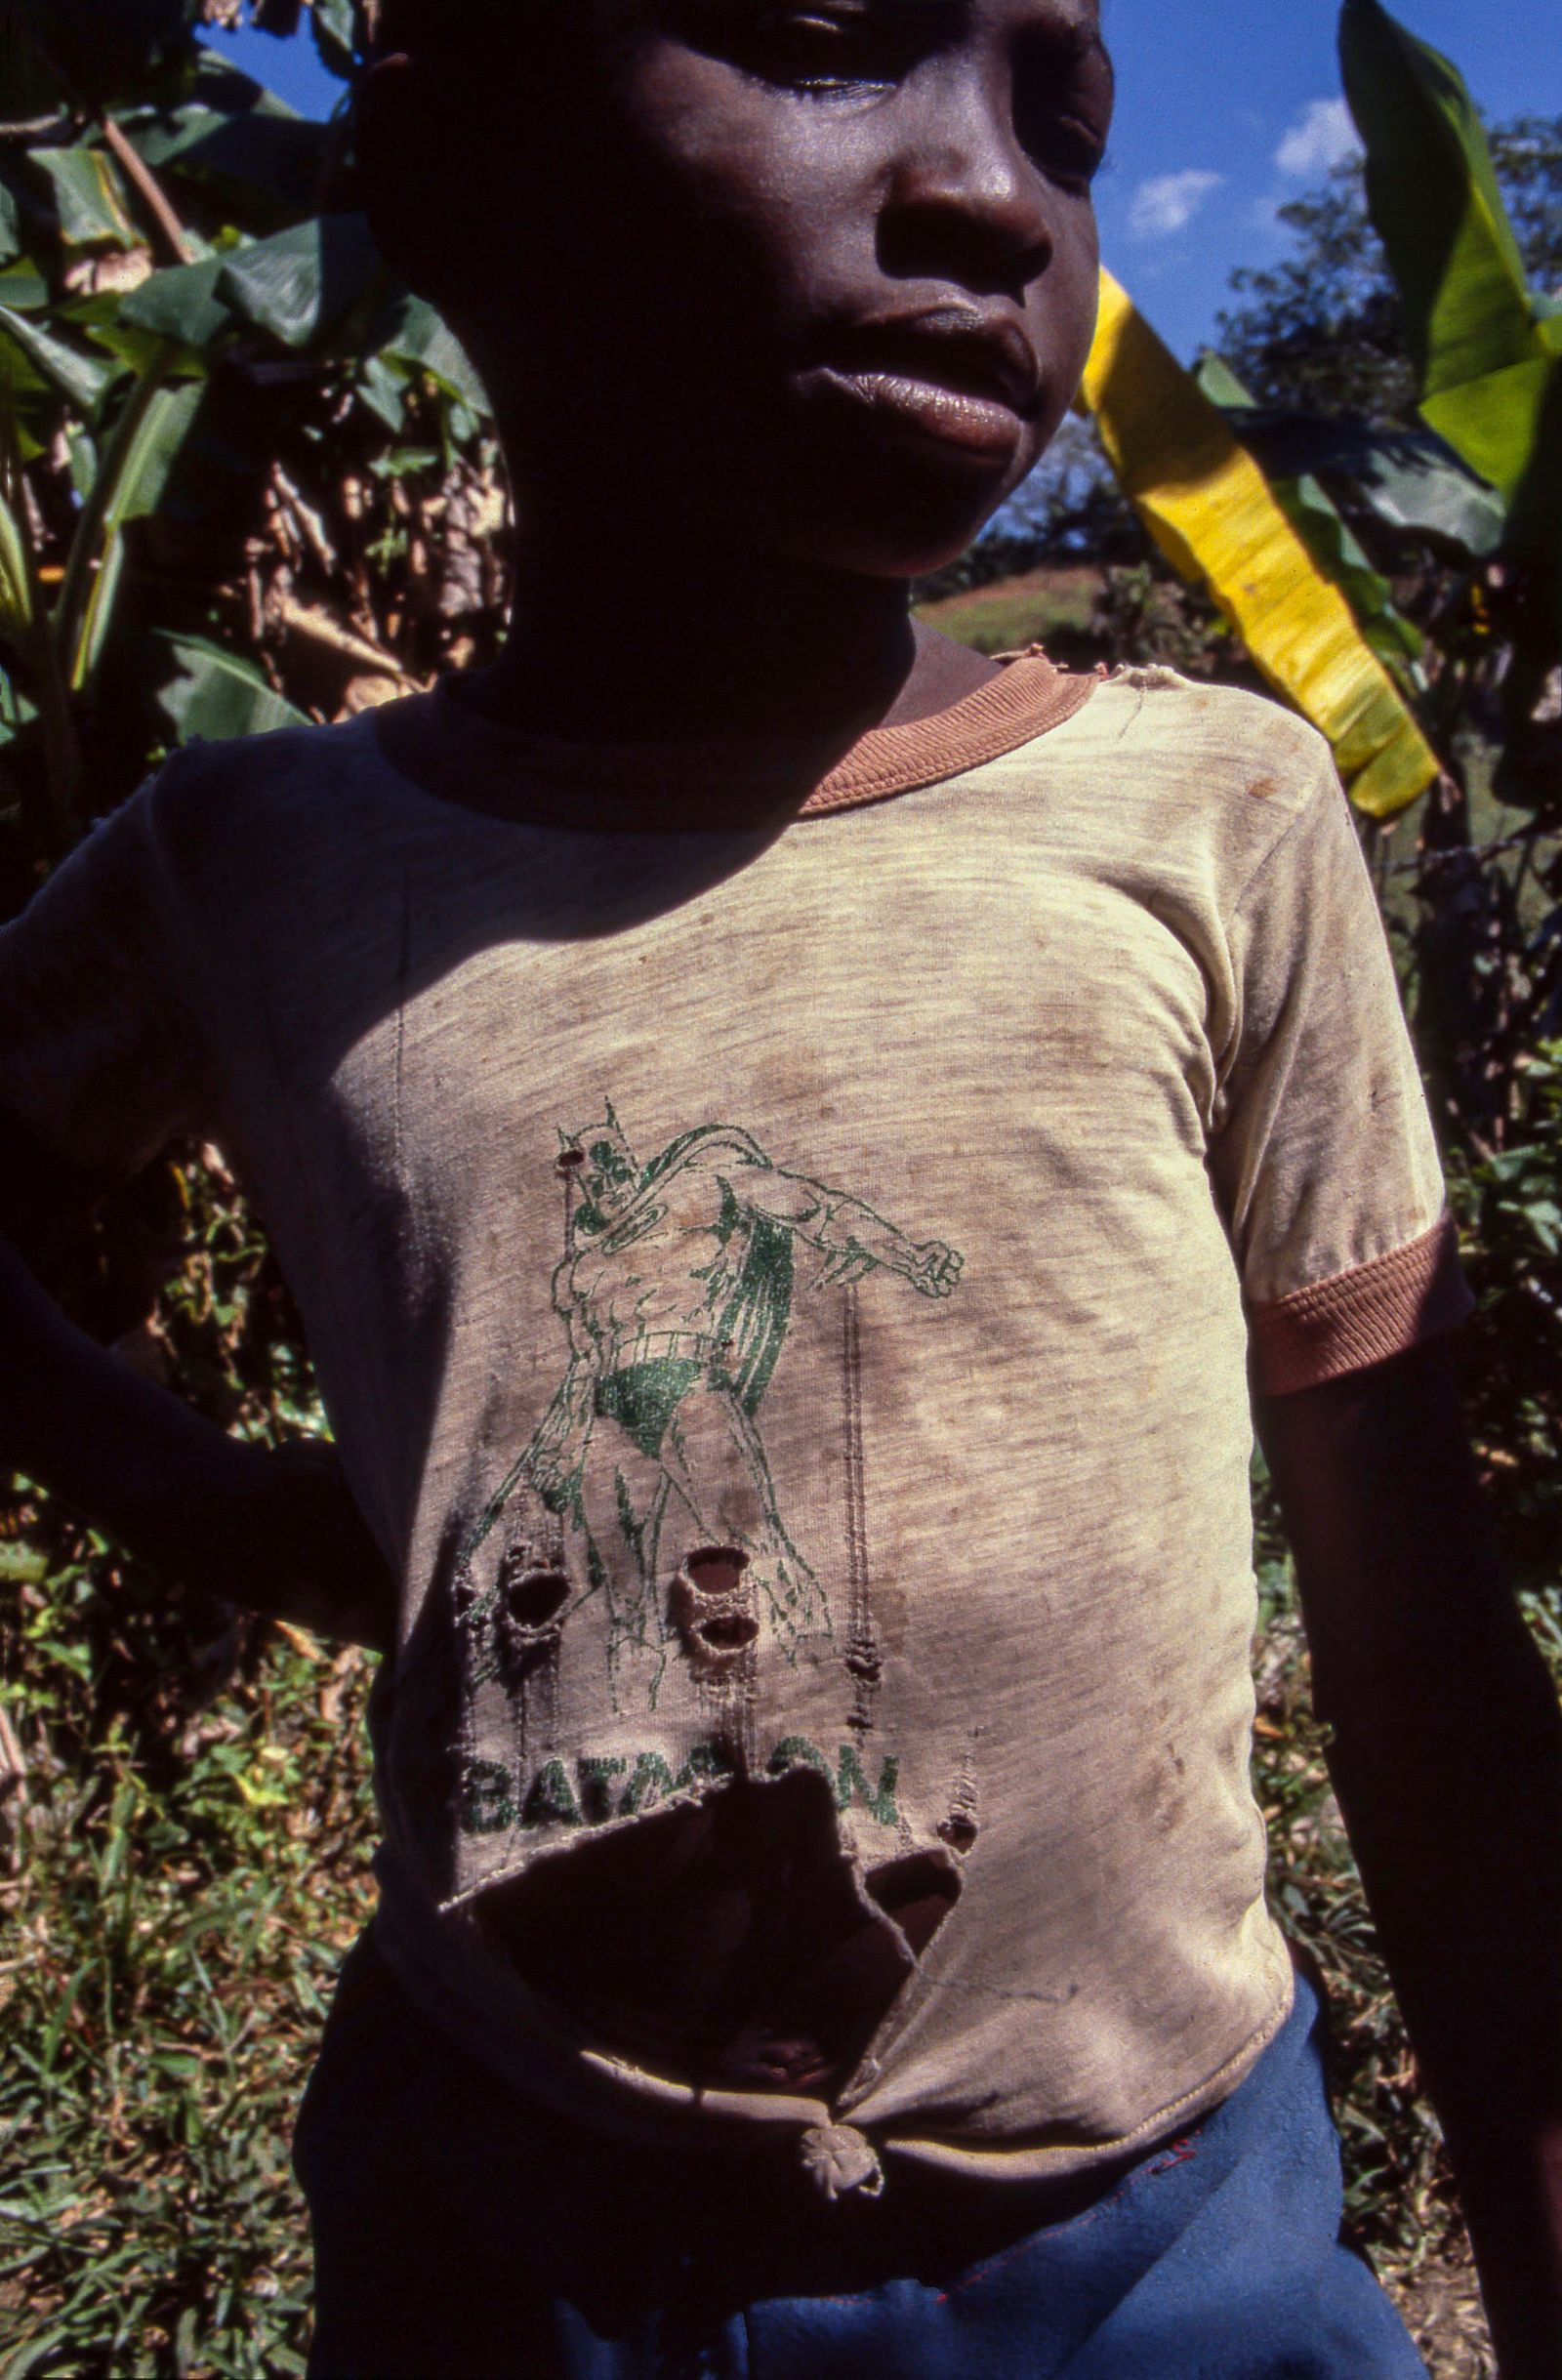 © Steven Edson - Portrait of a boy with tattered Batman t-shirt. Jamaica